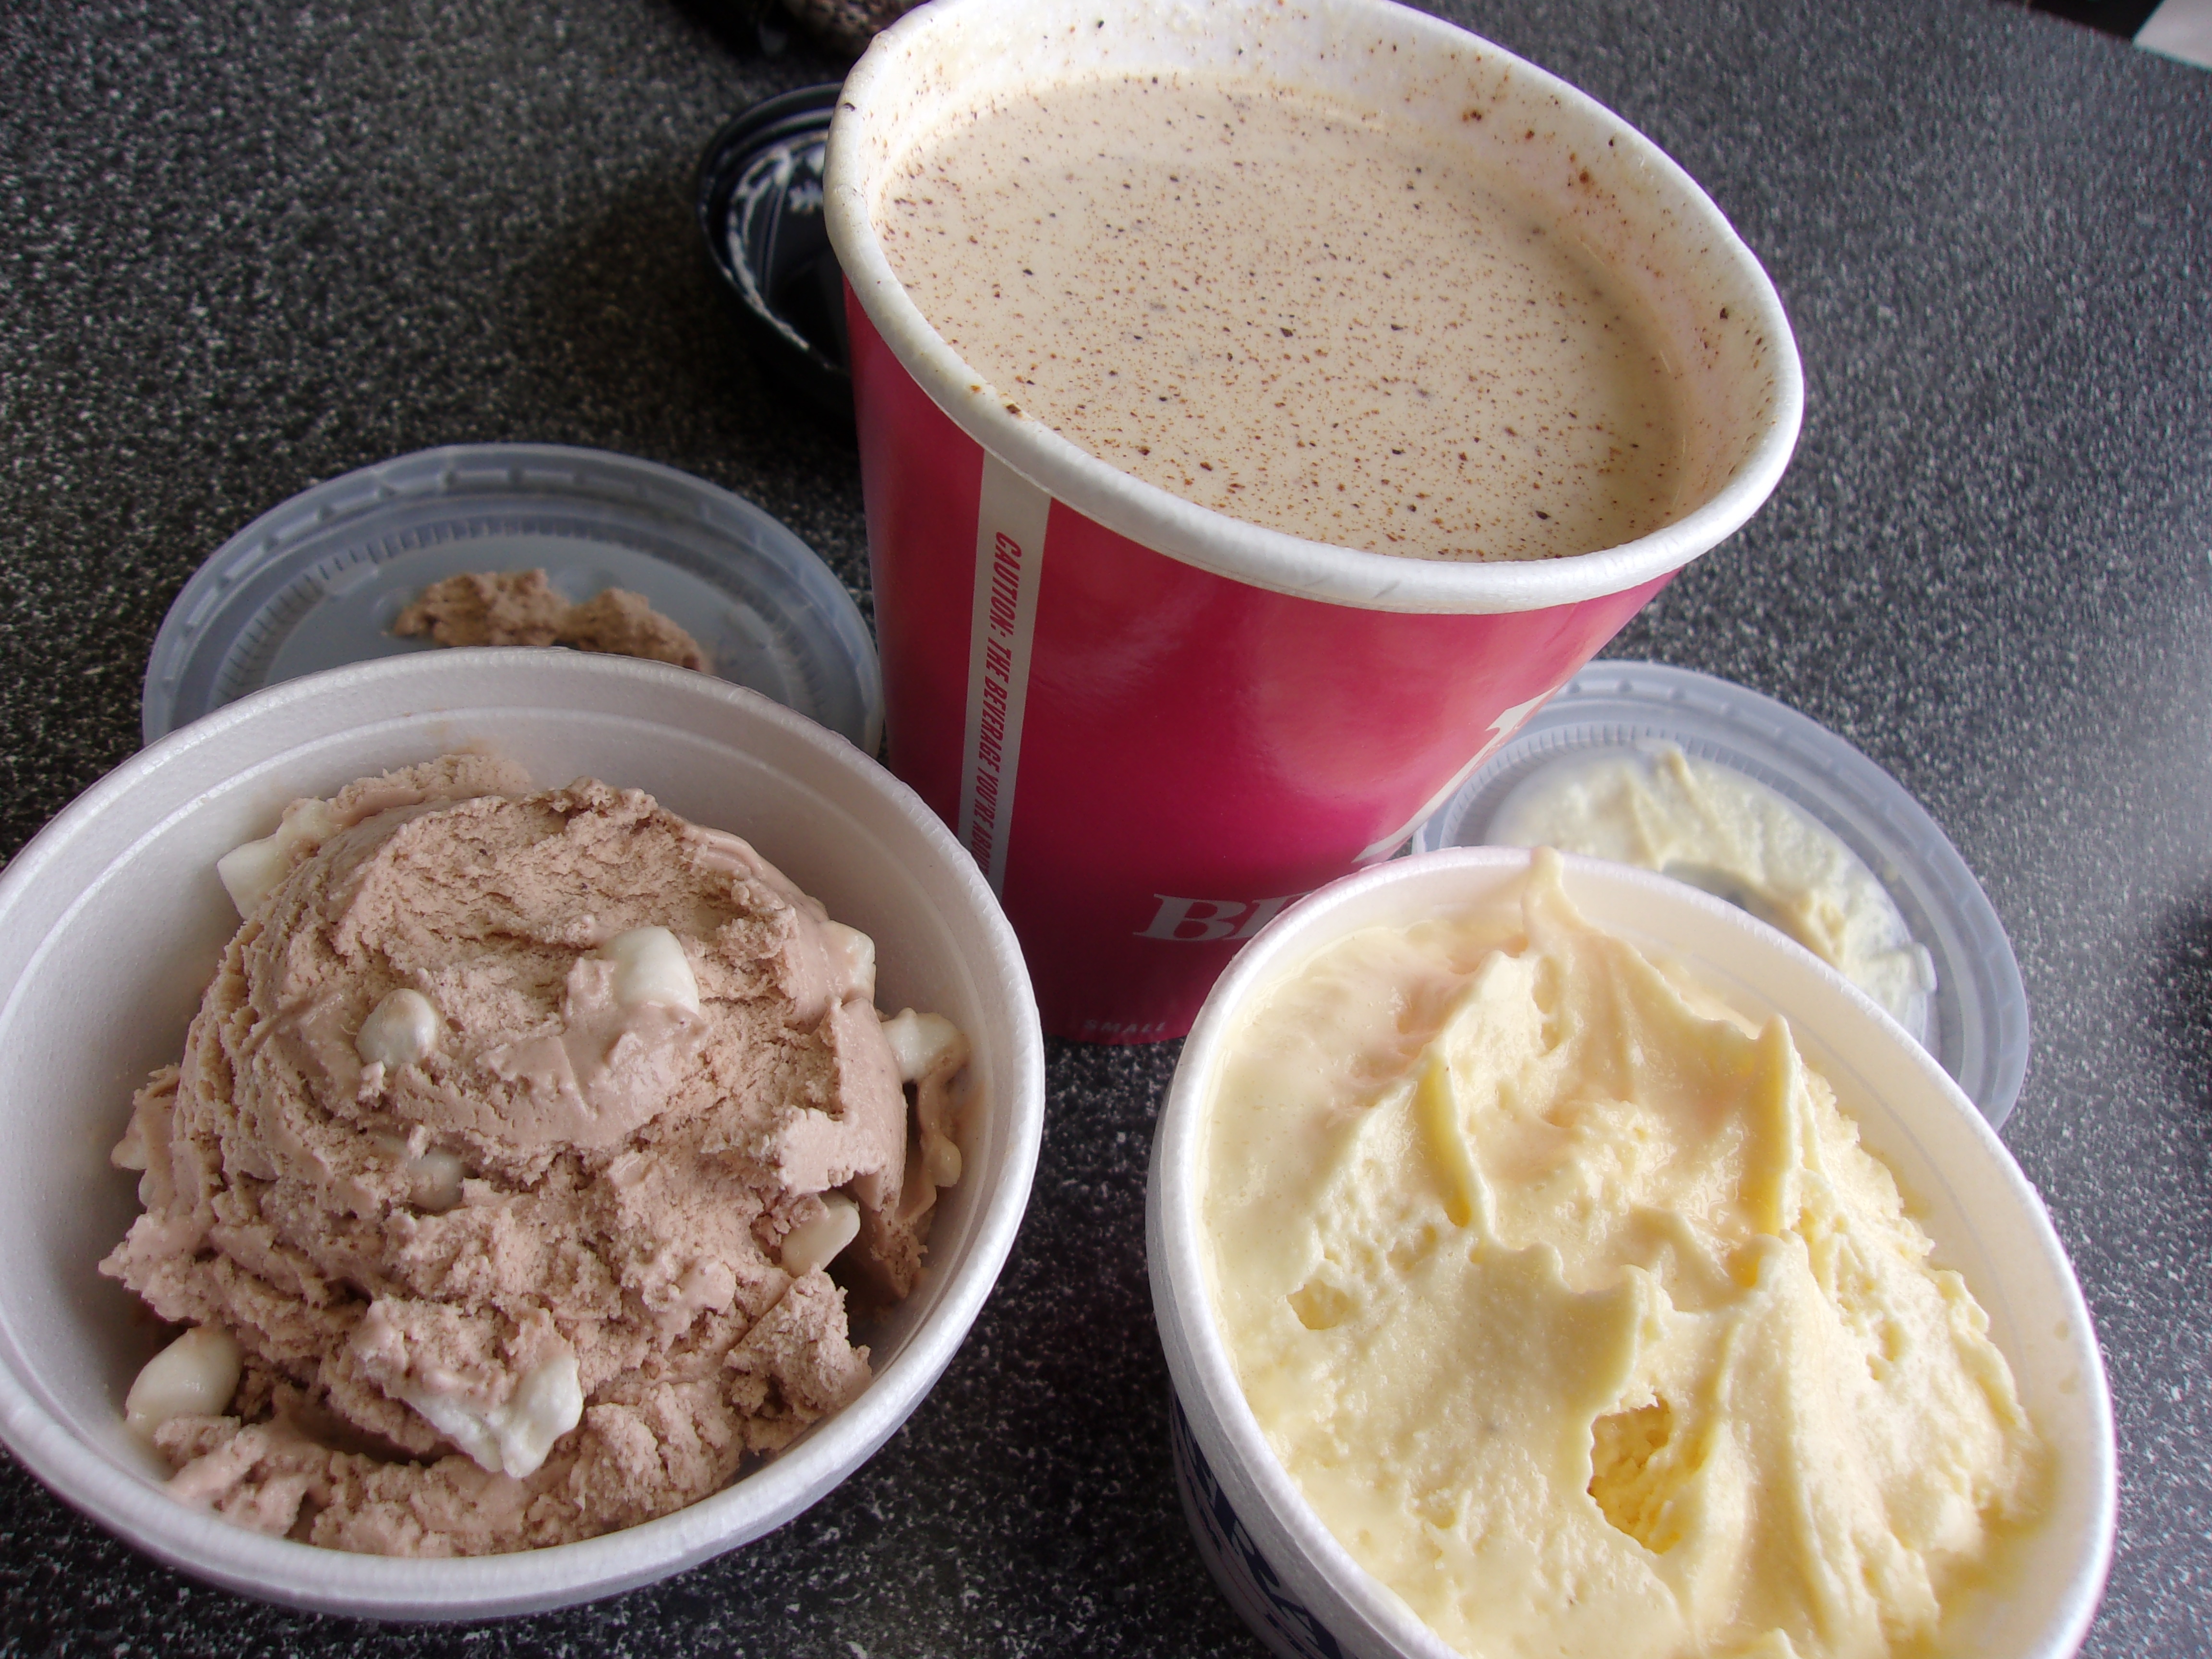 Braum's introduces 6 new ice cream flavors